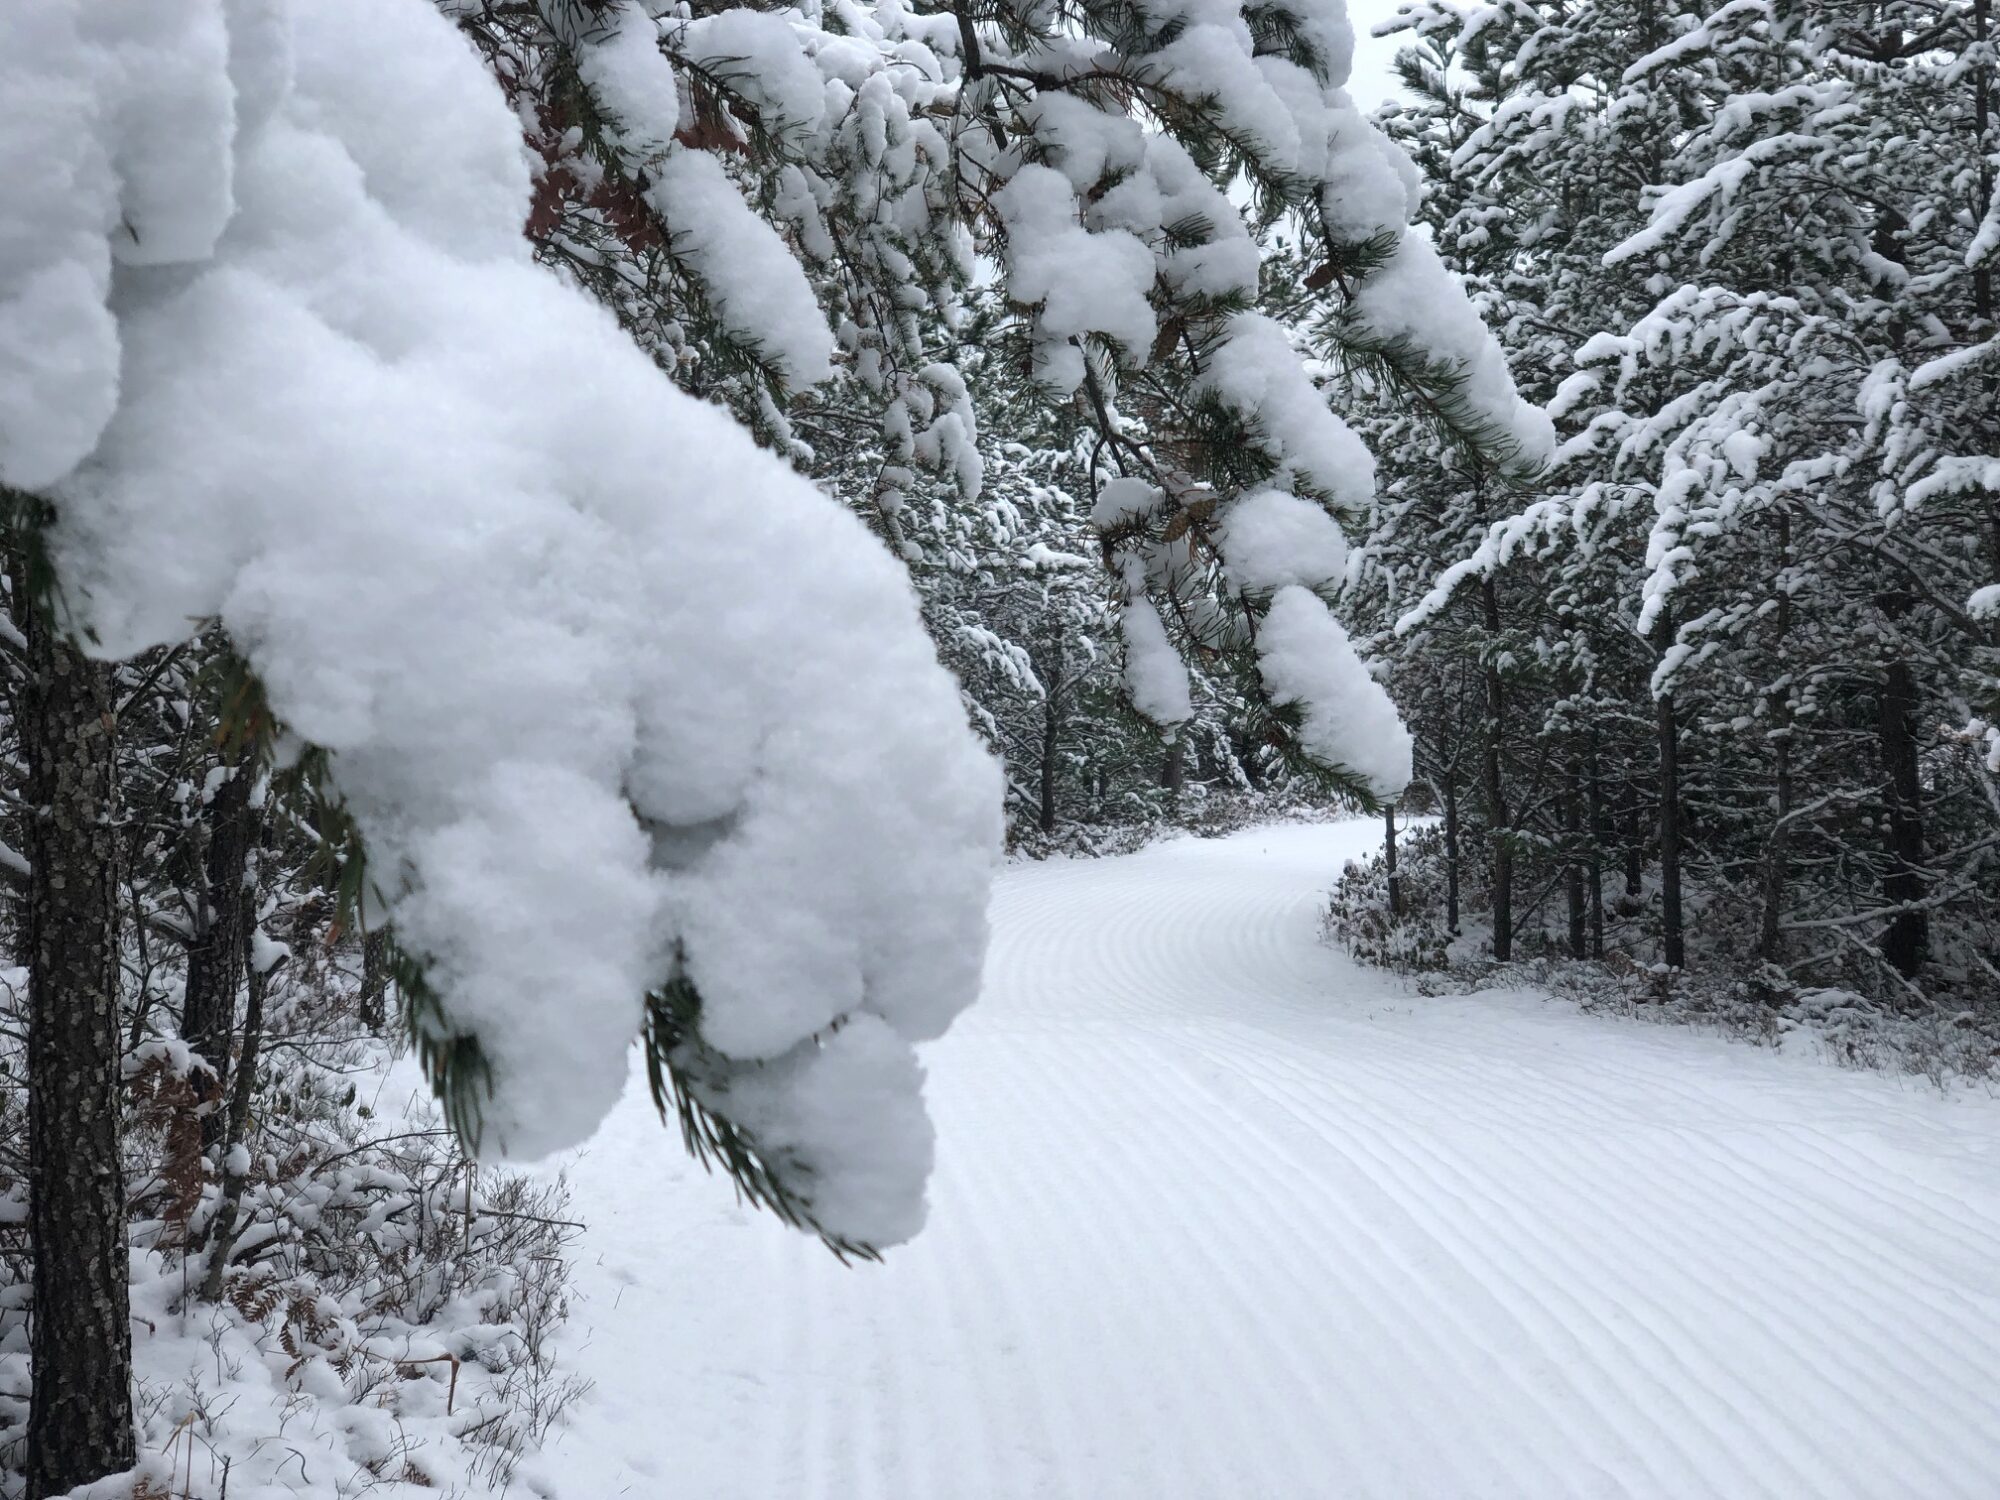 It's winter wonderland on the ski trails!